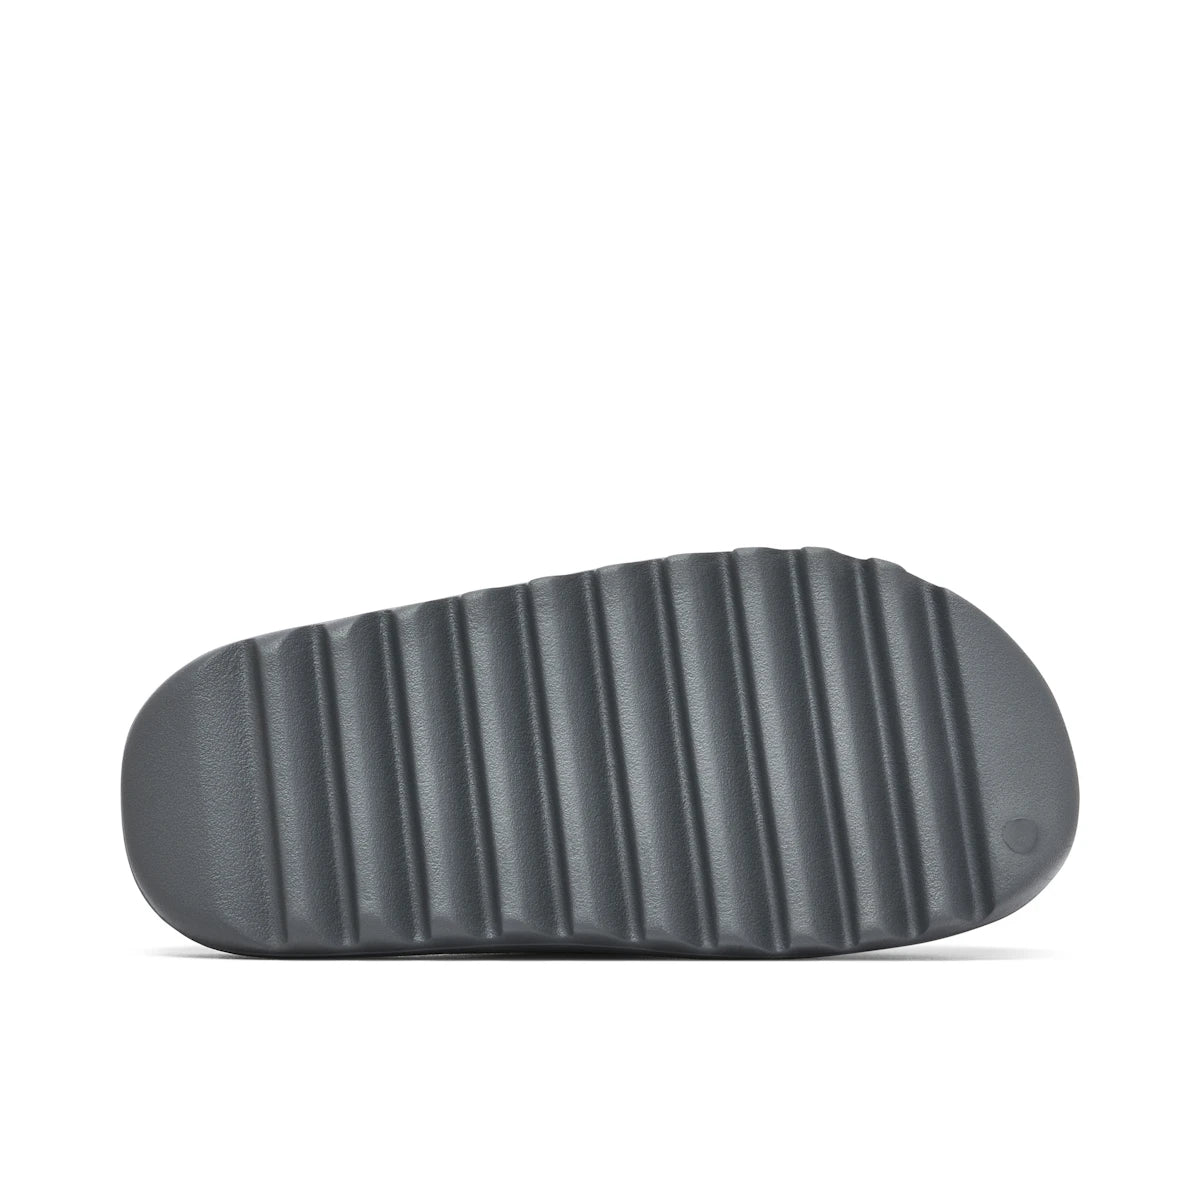 adidas Yeezy Slide Slate Grey by Yeezy from £85.00